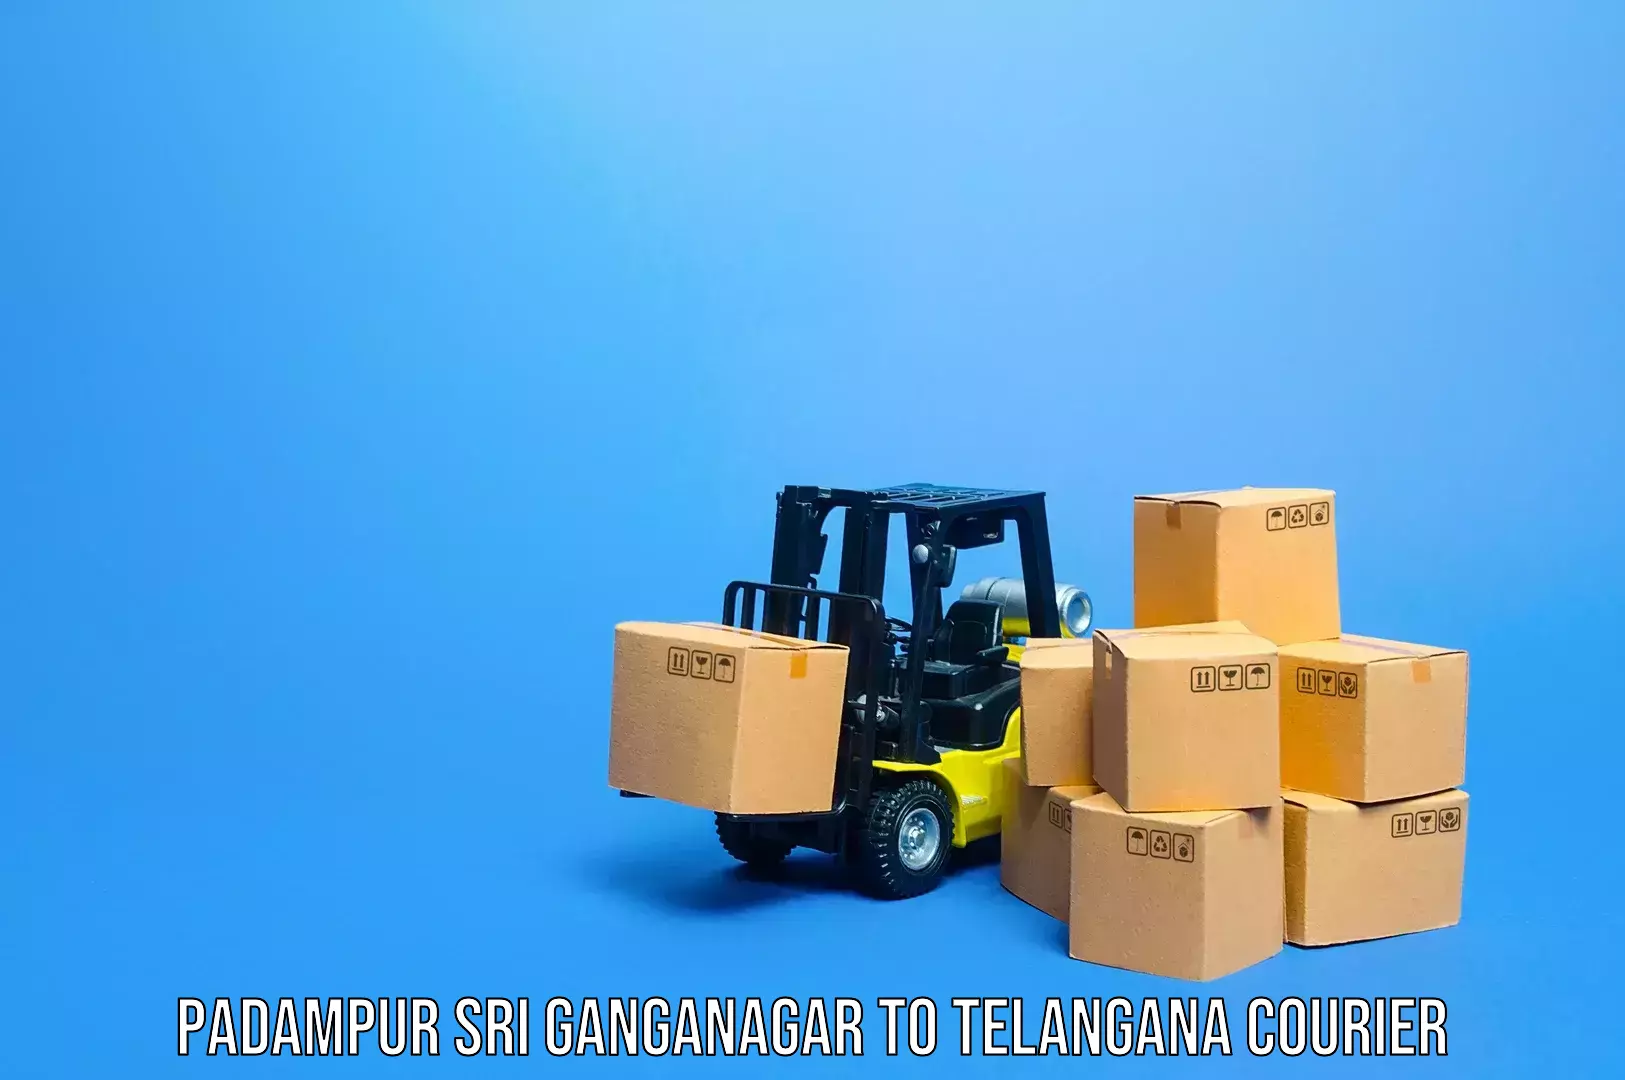 Baggage transport professionals Padampur Sri Ganganagar to Zahirabad